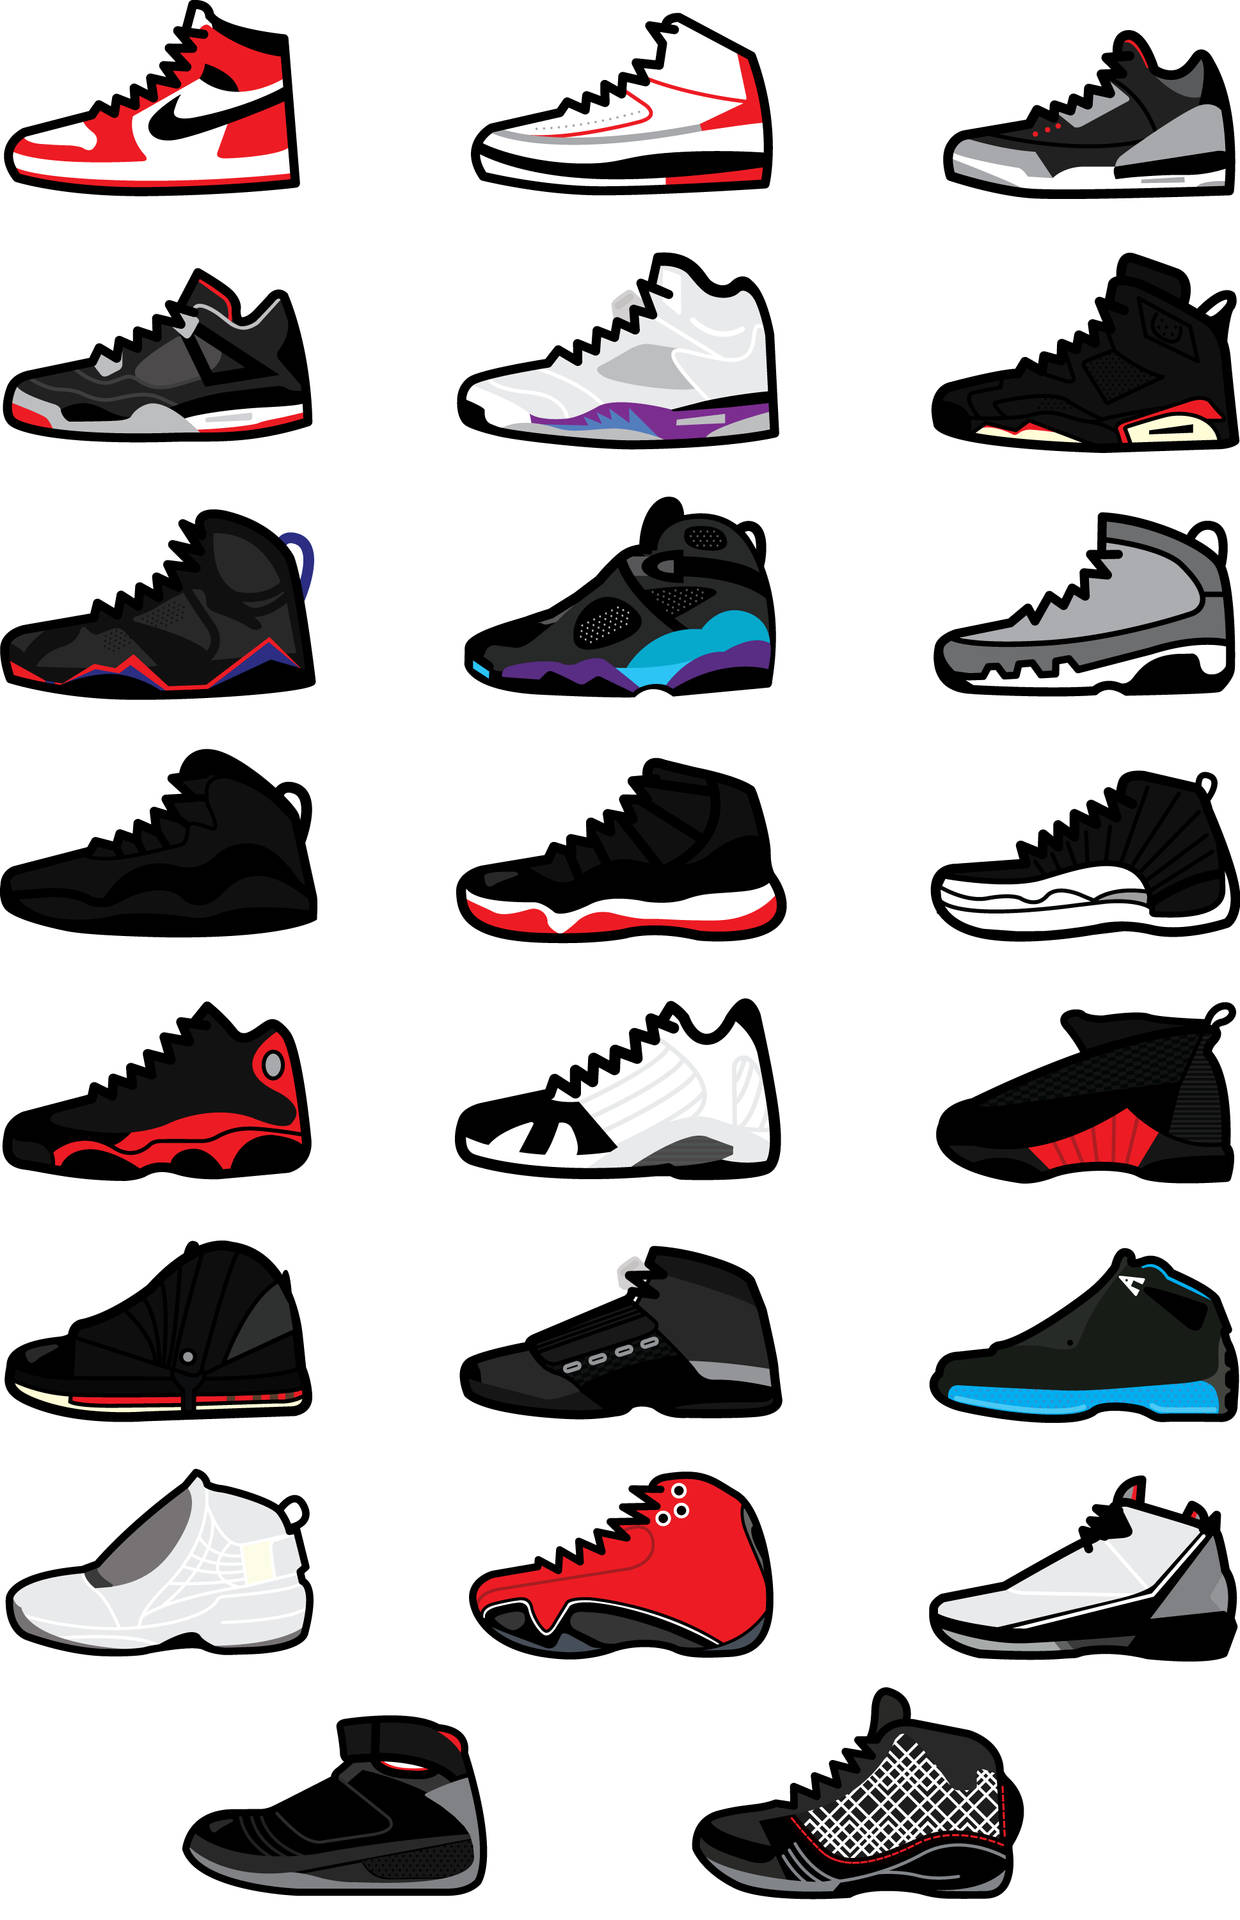 Jordan Shoes Collection Wallpaper